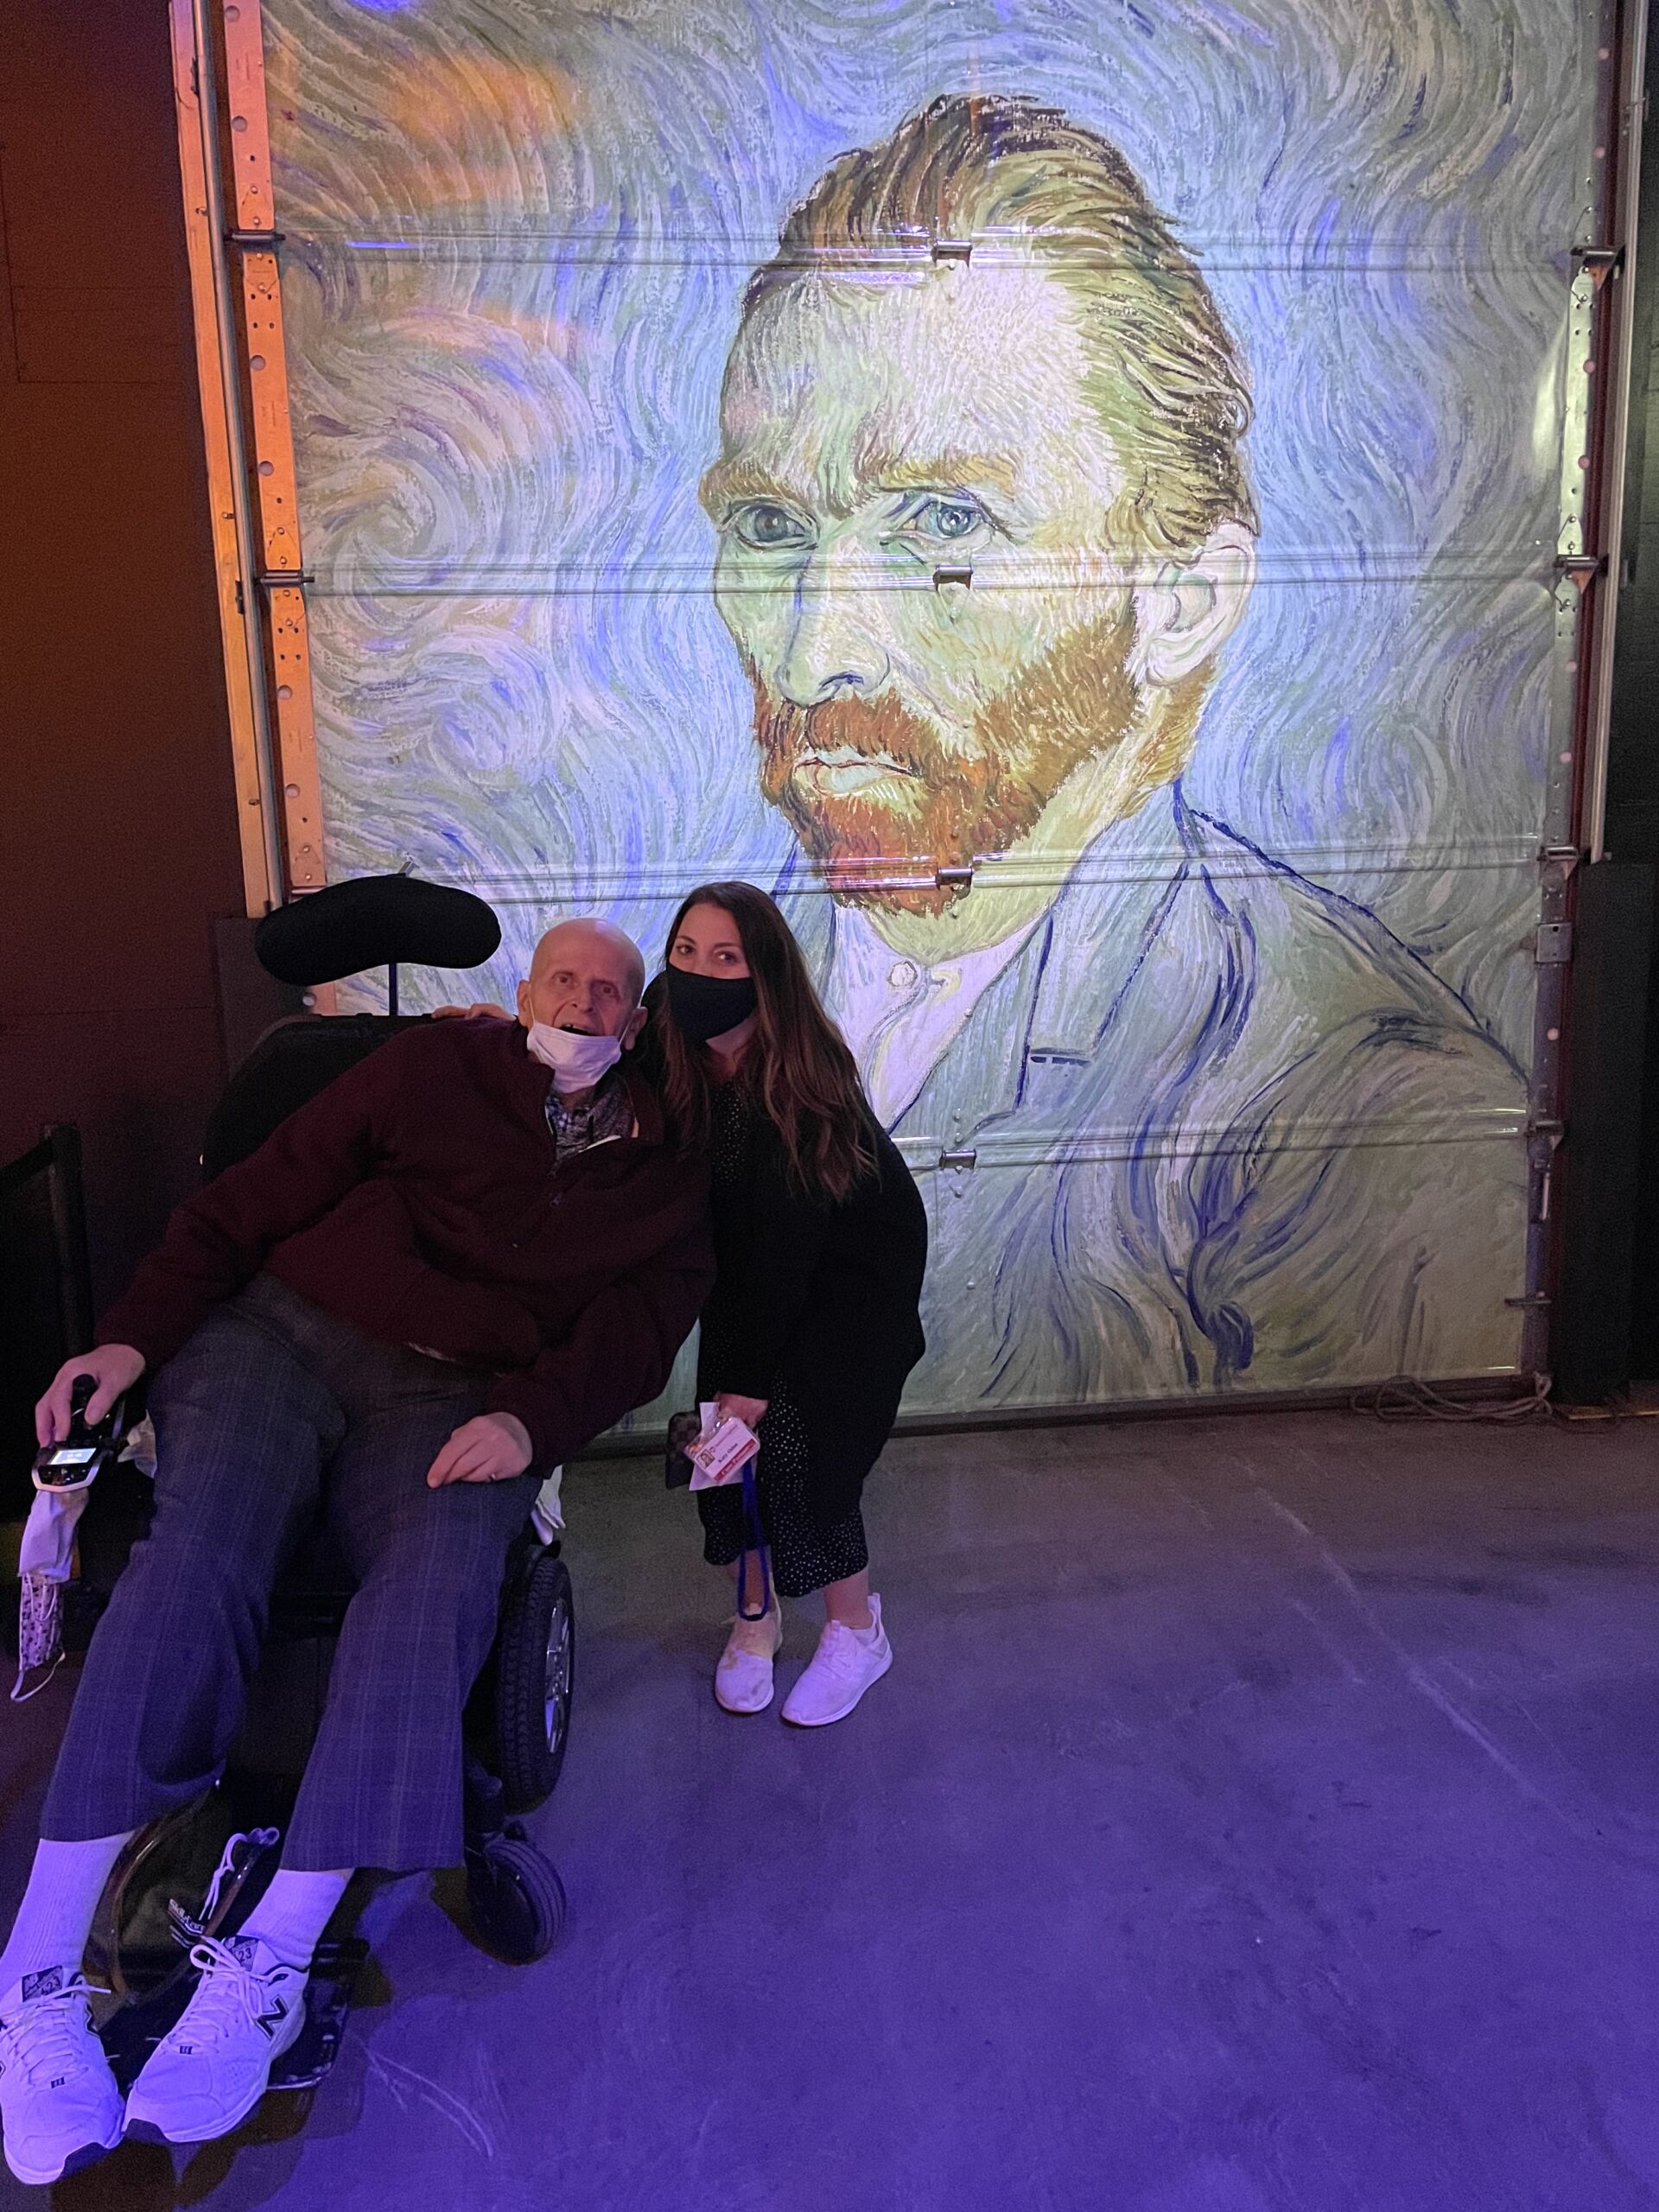 Joe Rusinko attends The Original Immersive Van Gogh Exhibit Pittsburgh with Care Partner, Kate Oden